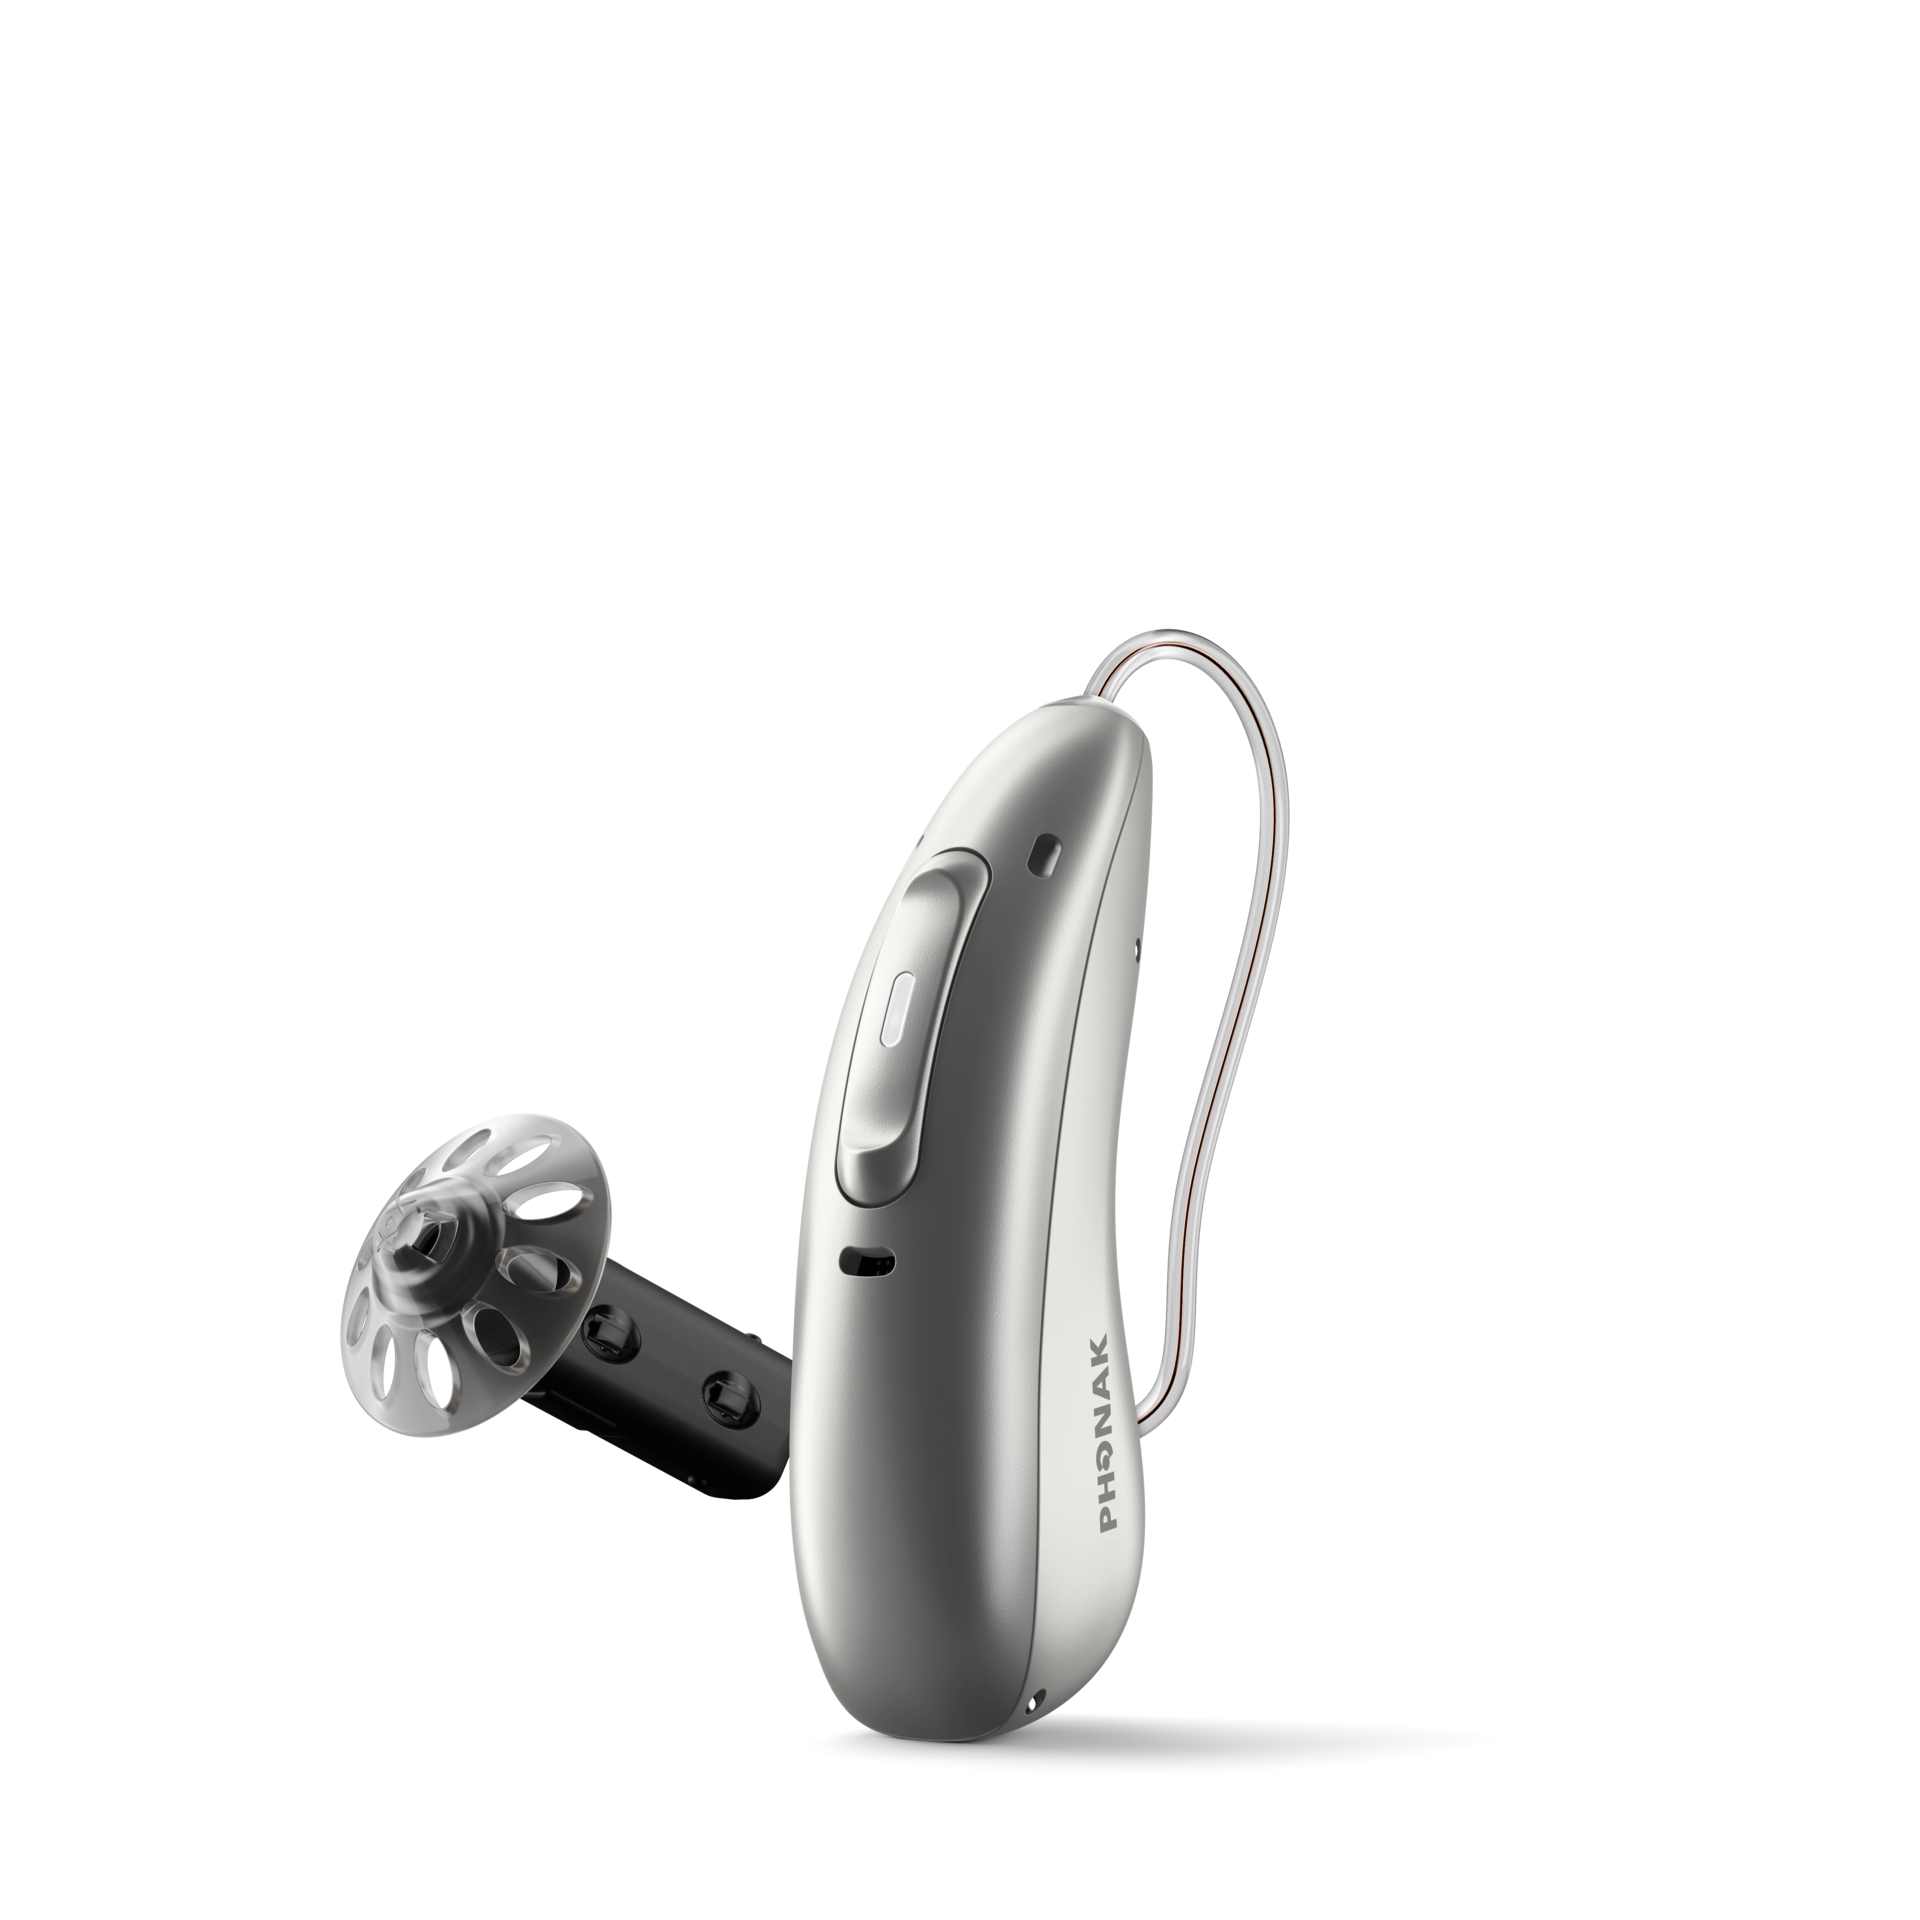 Phonak Audéo P-R Fit hearing aid.